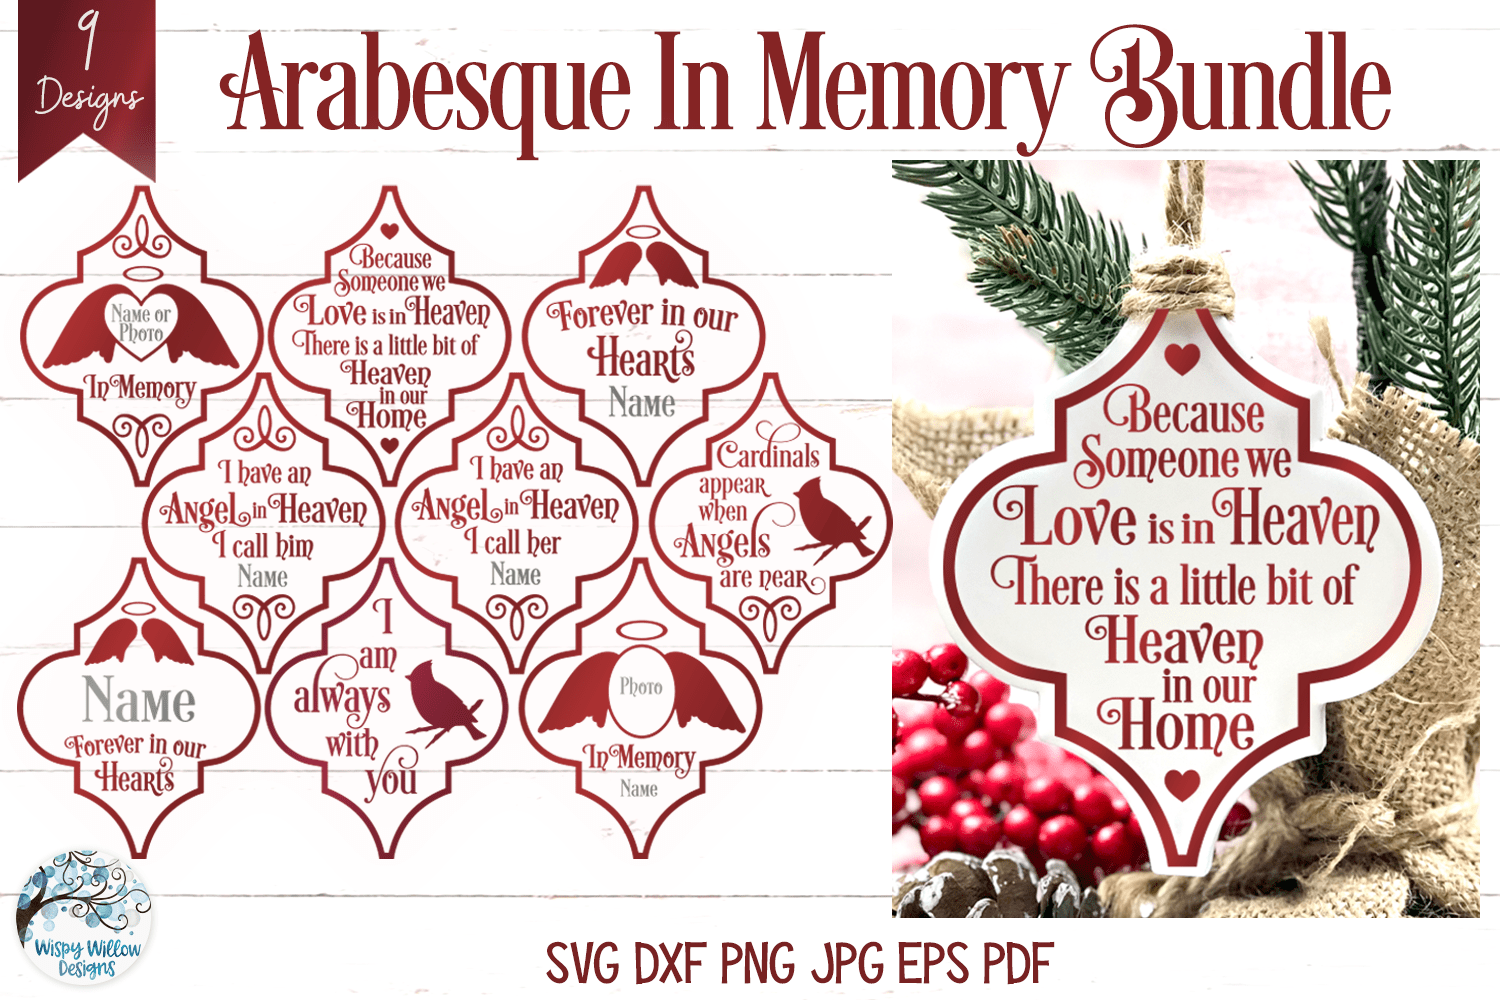 Arabesque Ornament SVG Bundle - In Memory Ornaments Wispy Willow Designs Company